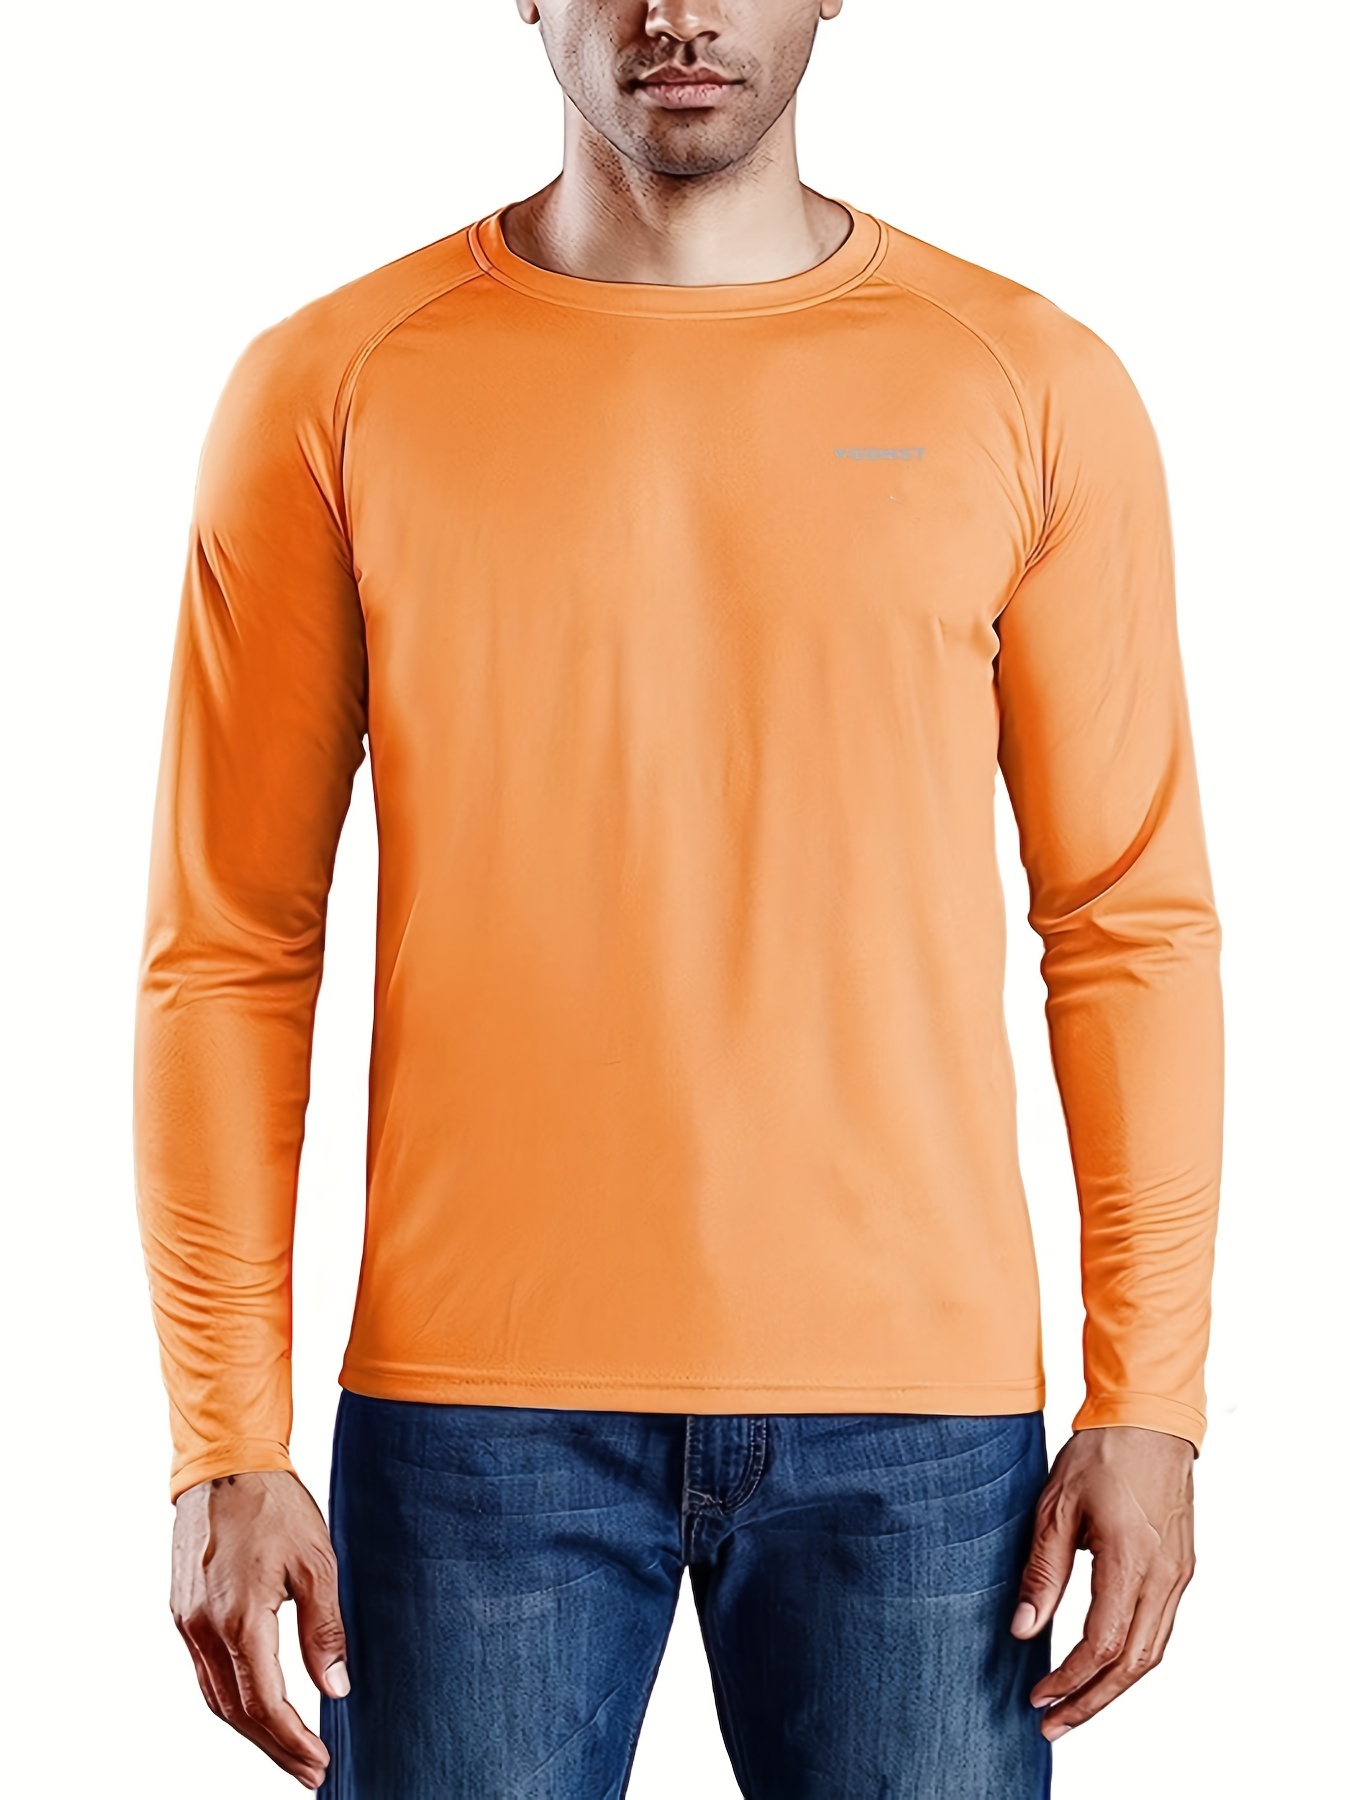 Men's Long Sleeve Swim Shirts Rash Guard Shirts UPF 50+ Sun Protection  Quick Dry T-Shirt Athletic Workout Running Tops Shirts